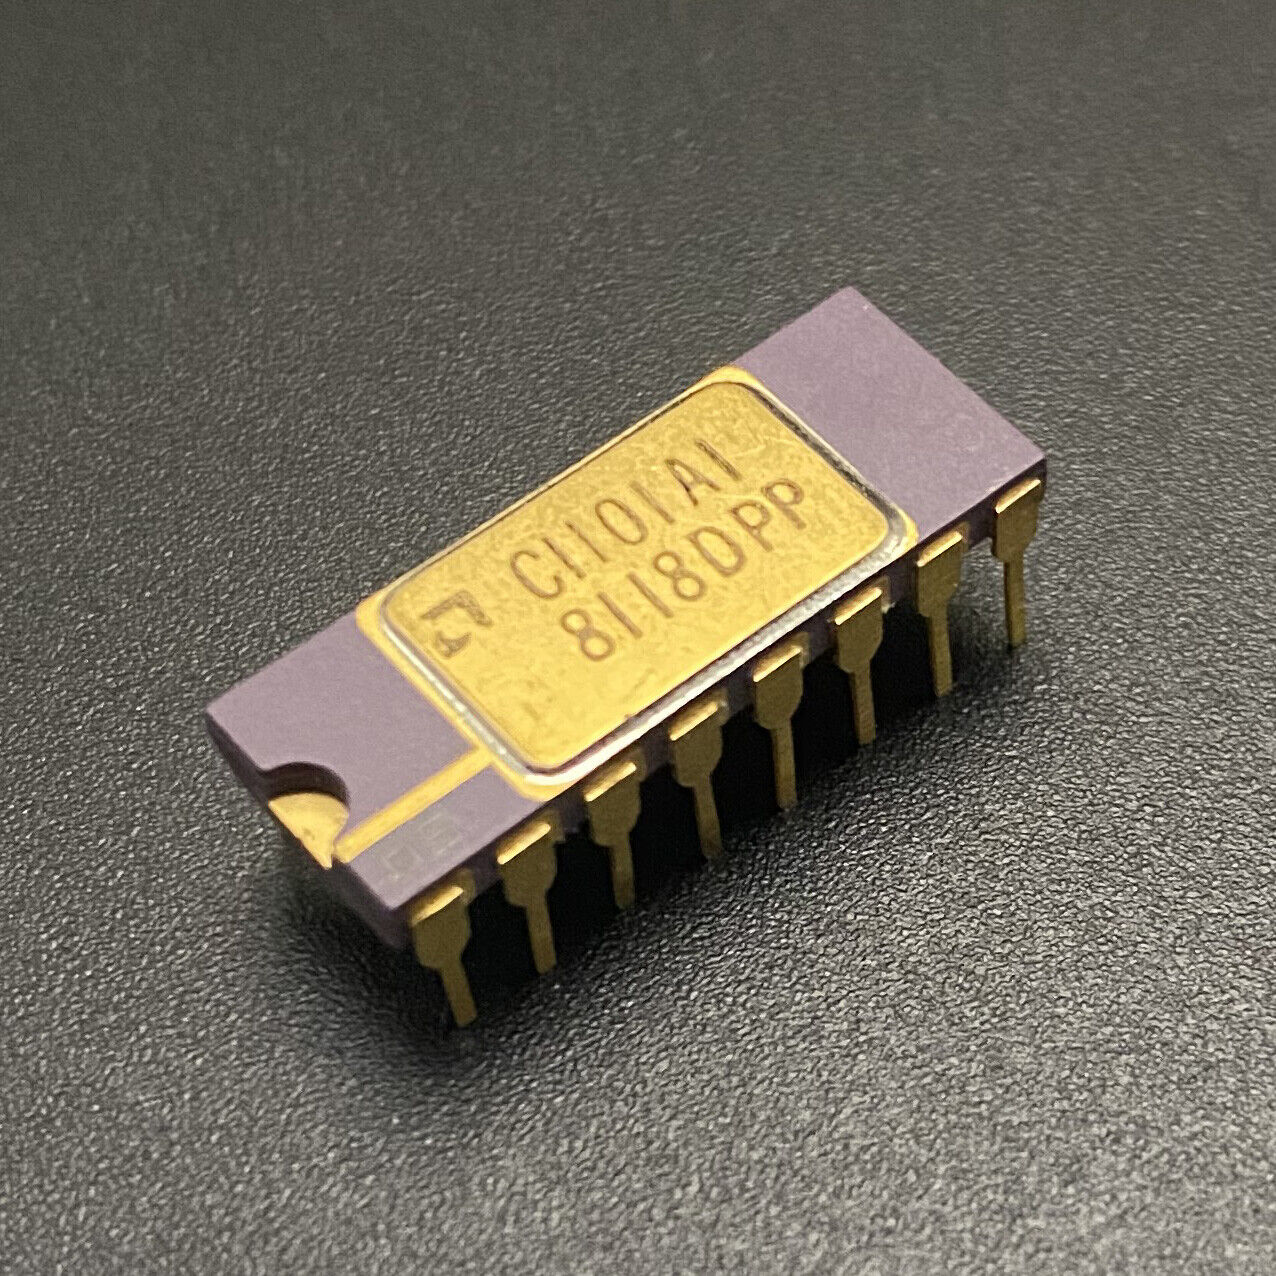 AMD C1101A1 Static RAM Chip DIP16 1101 12μm MOS SRAM Rare